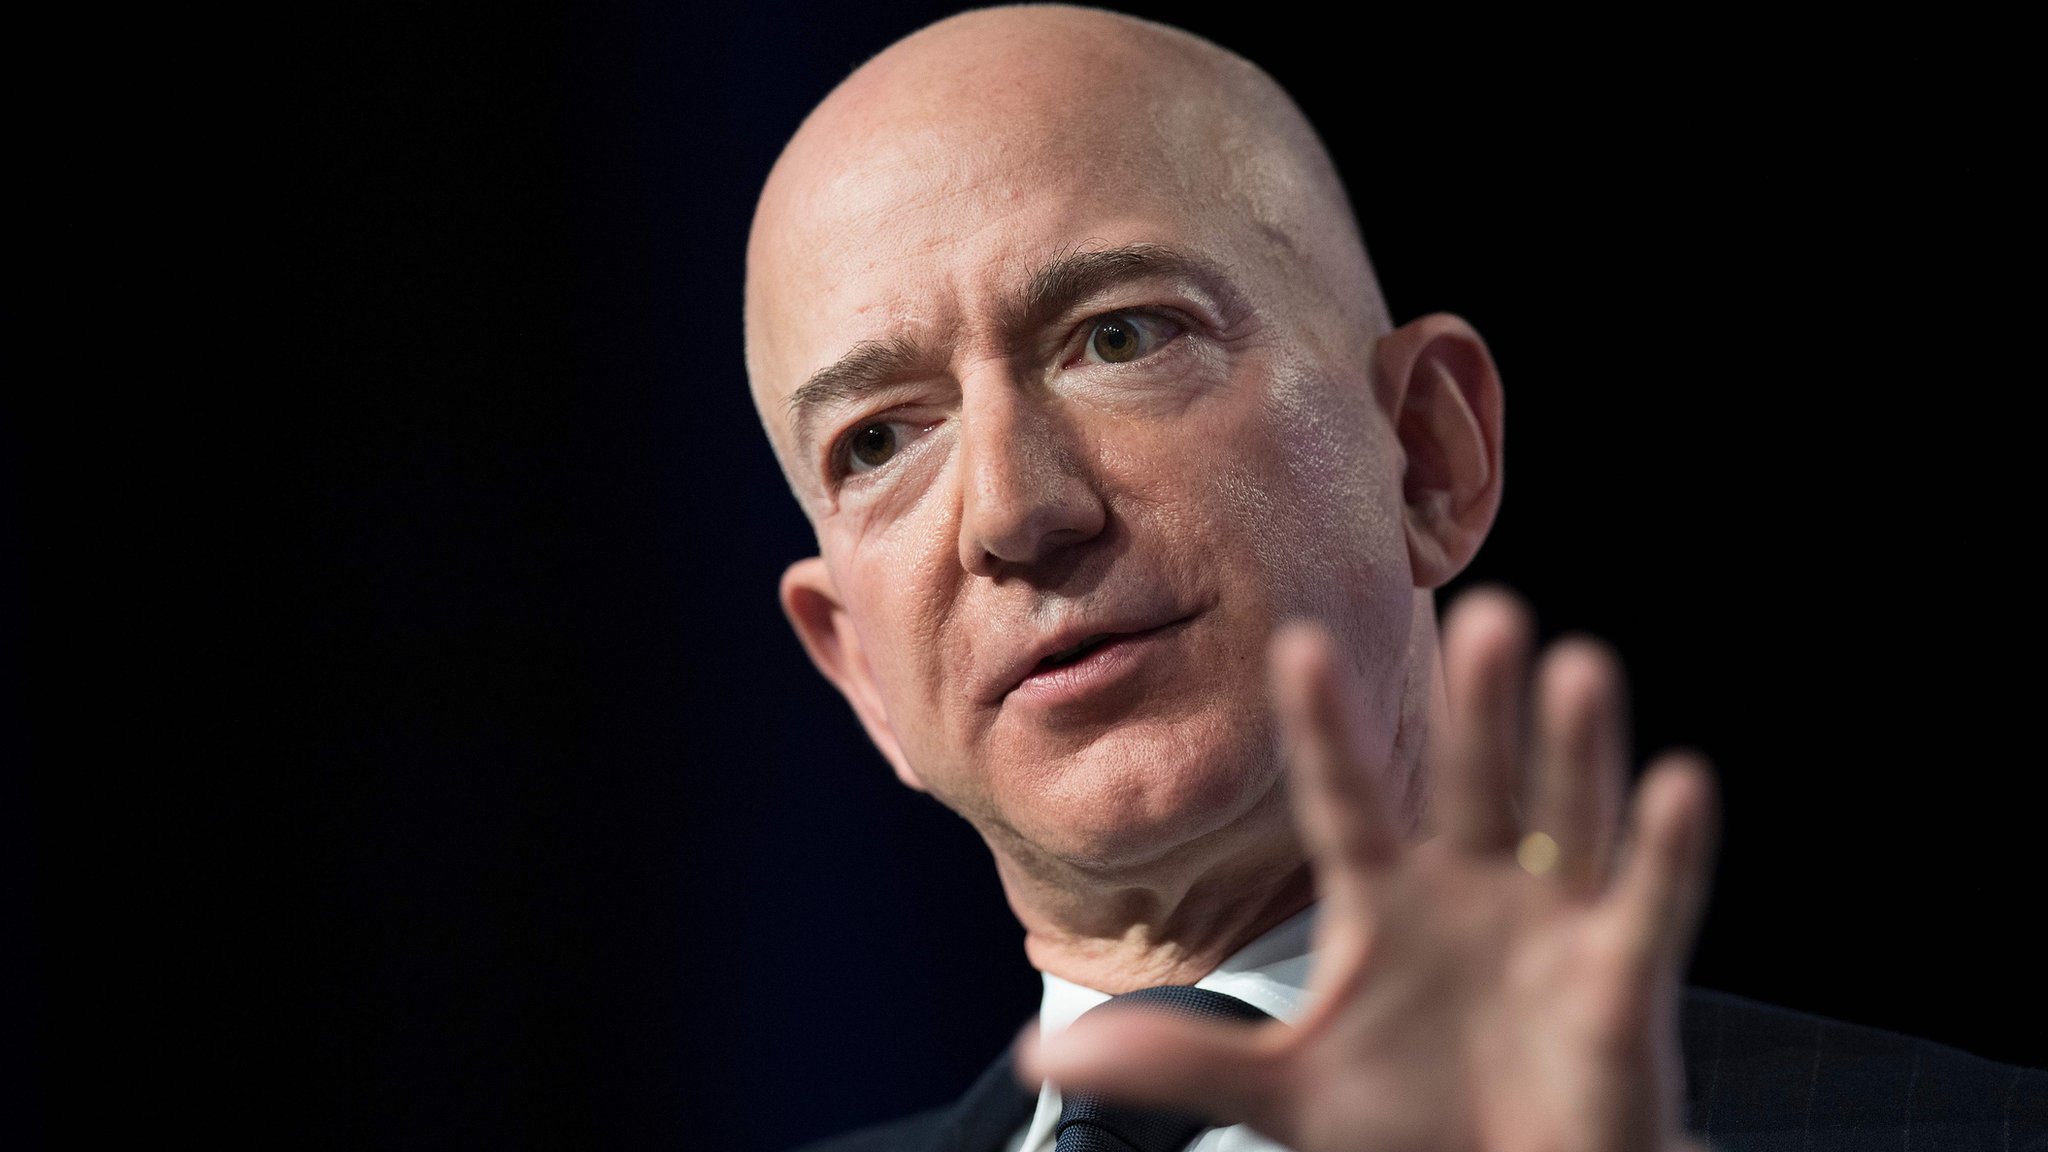 Jeff Bezos: Amazon boss accuses Enquirer of blackmail - BBC